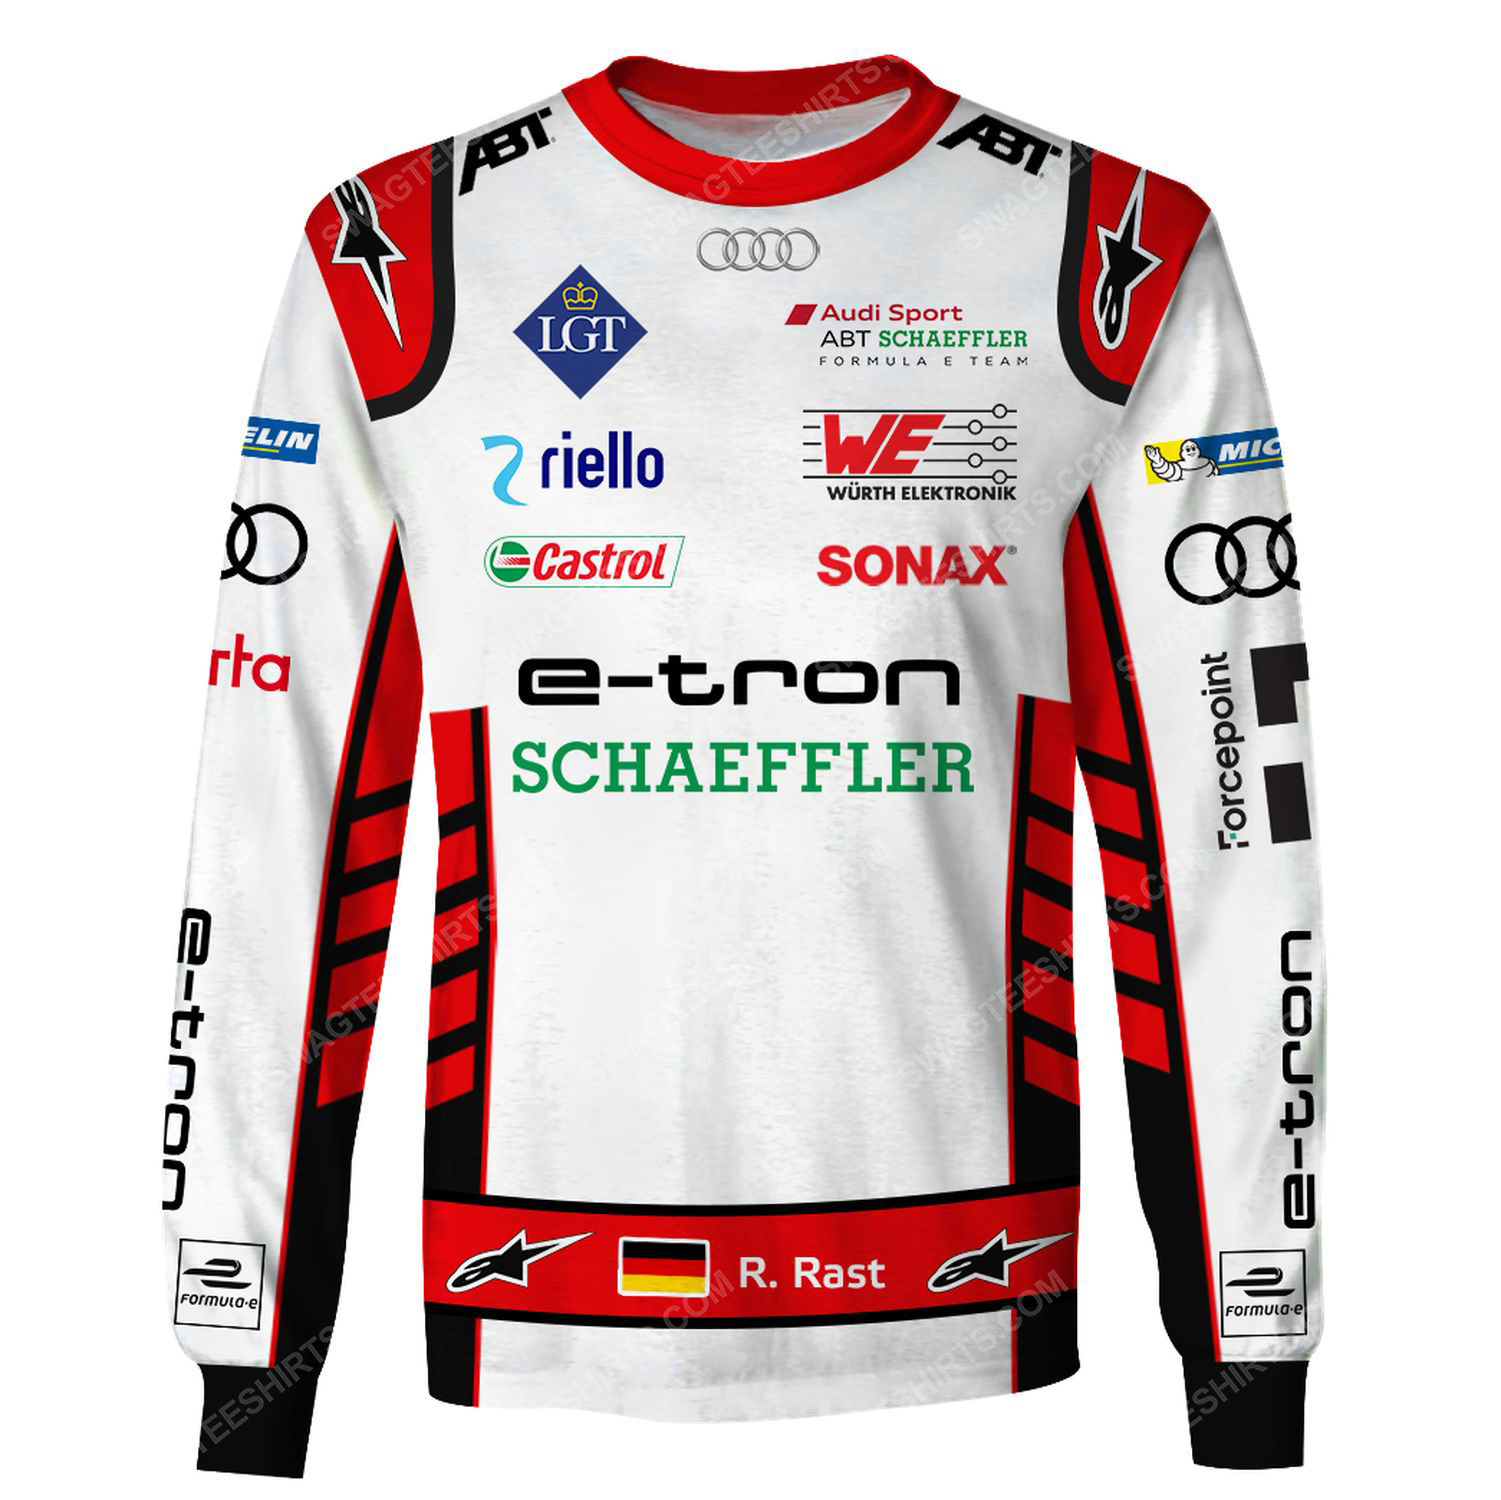 Audi e-tron schwarzer racing team motorsport full printing sweatshirt